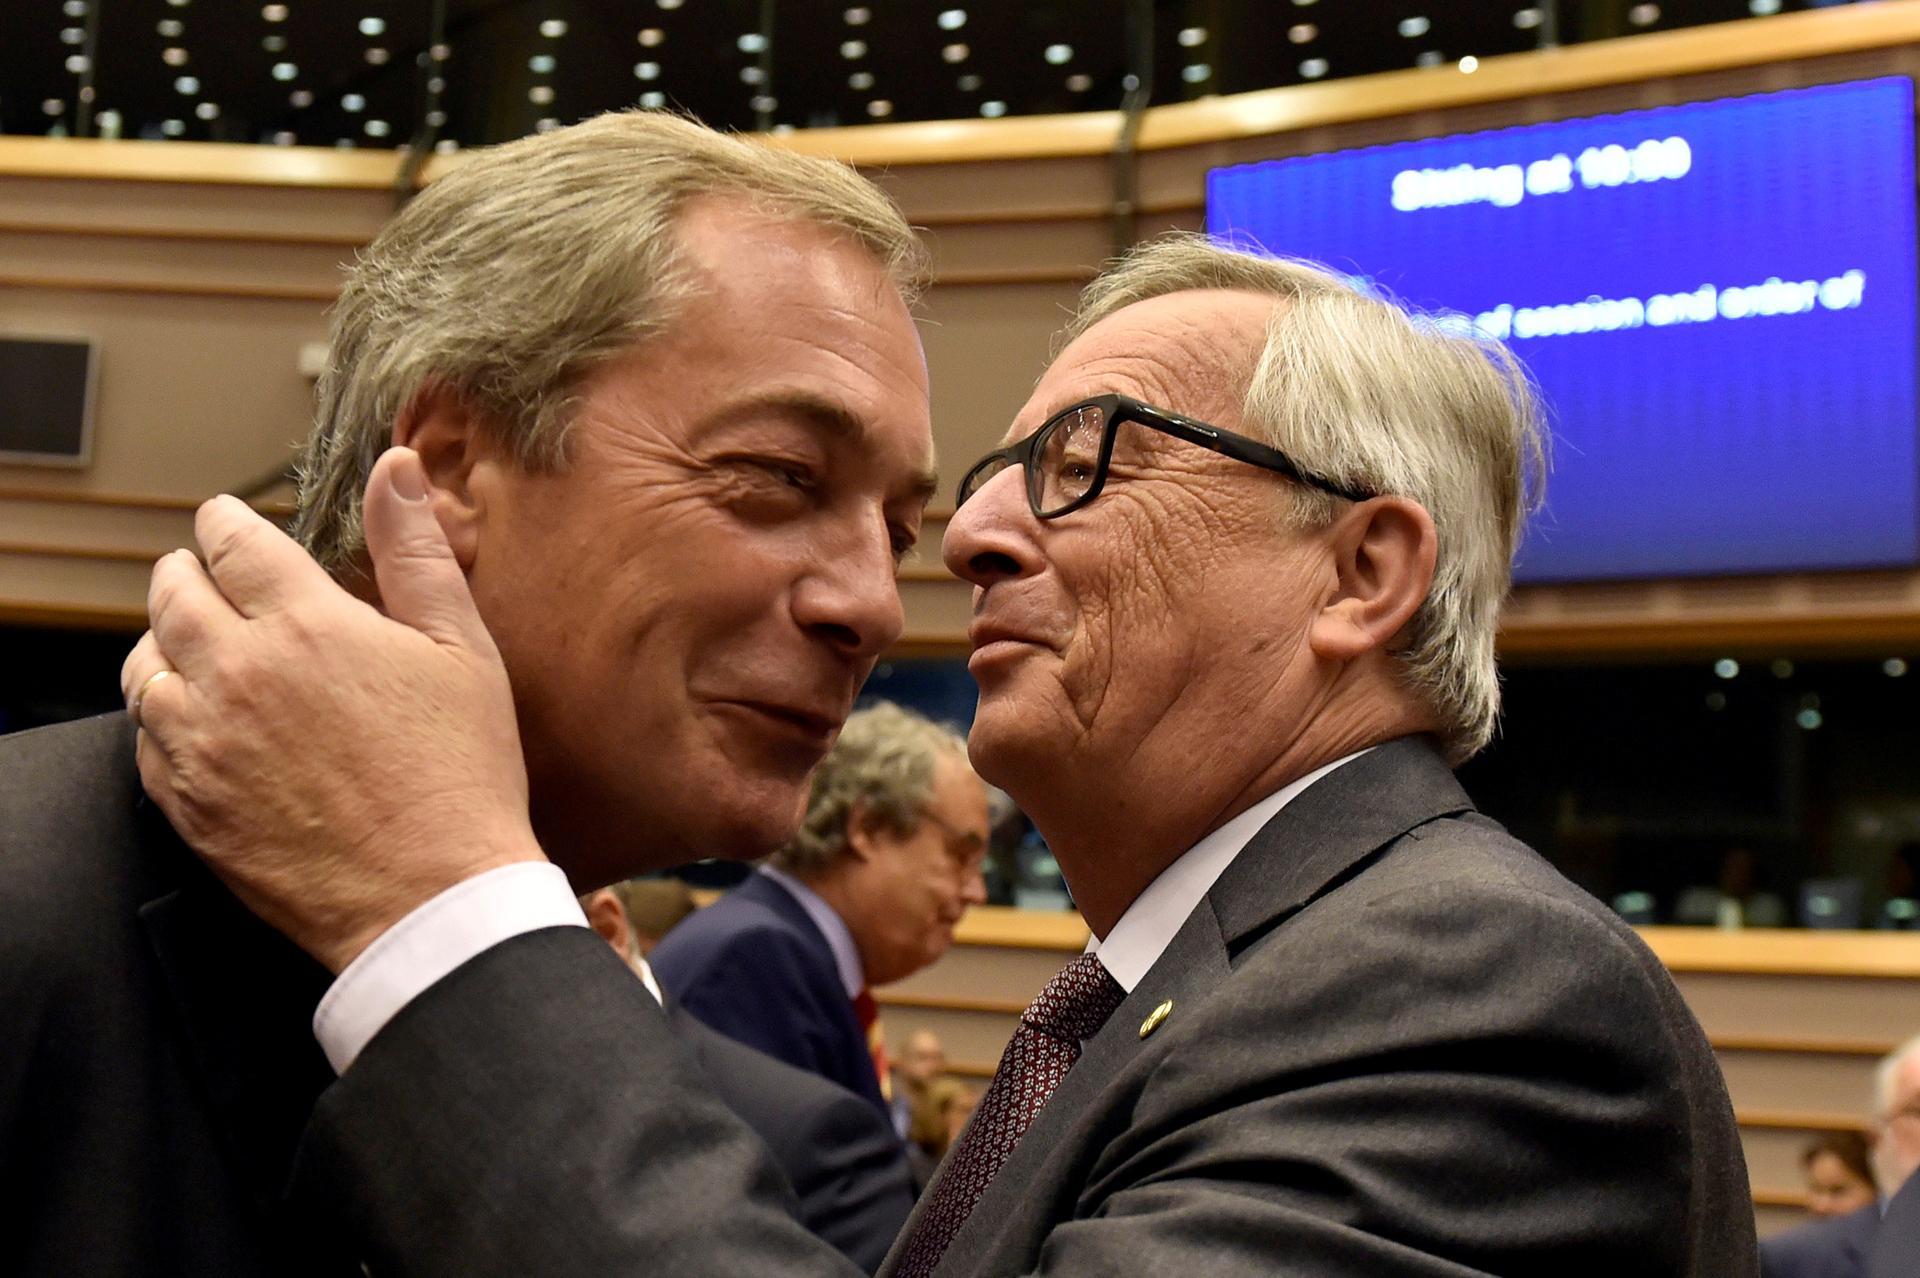 Jean-Claude Juncker welcomes Nigel Farage